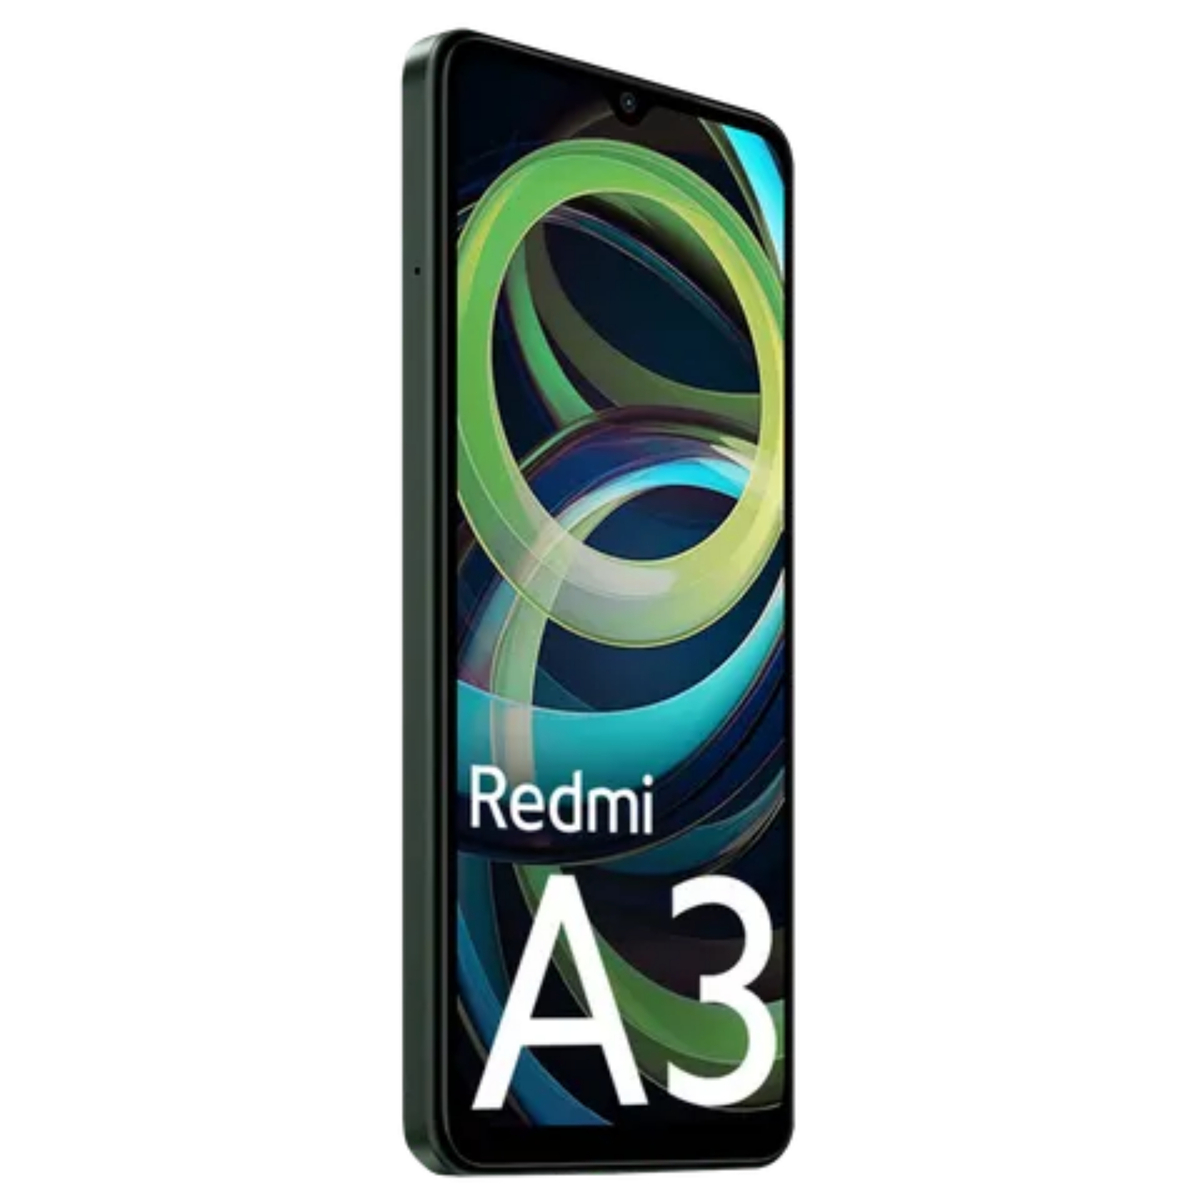 Xiaomi Redmi A3 4G Smartphone, 3 GB RAM, 64 GB Storage, Forest Green